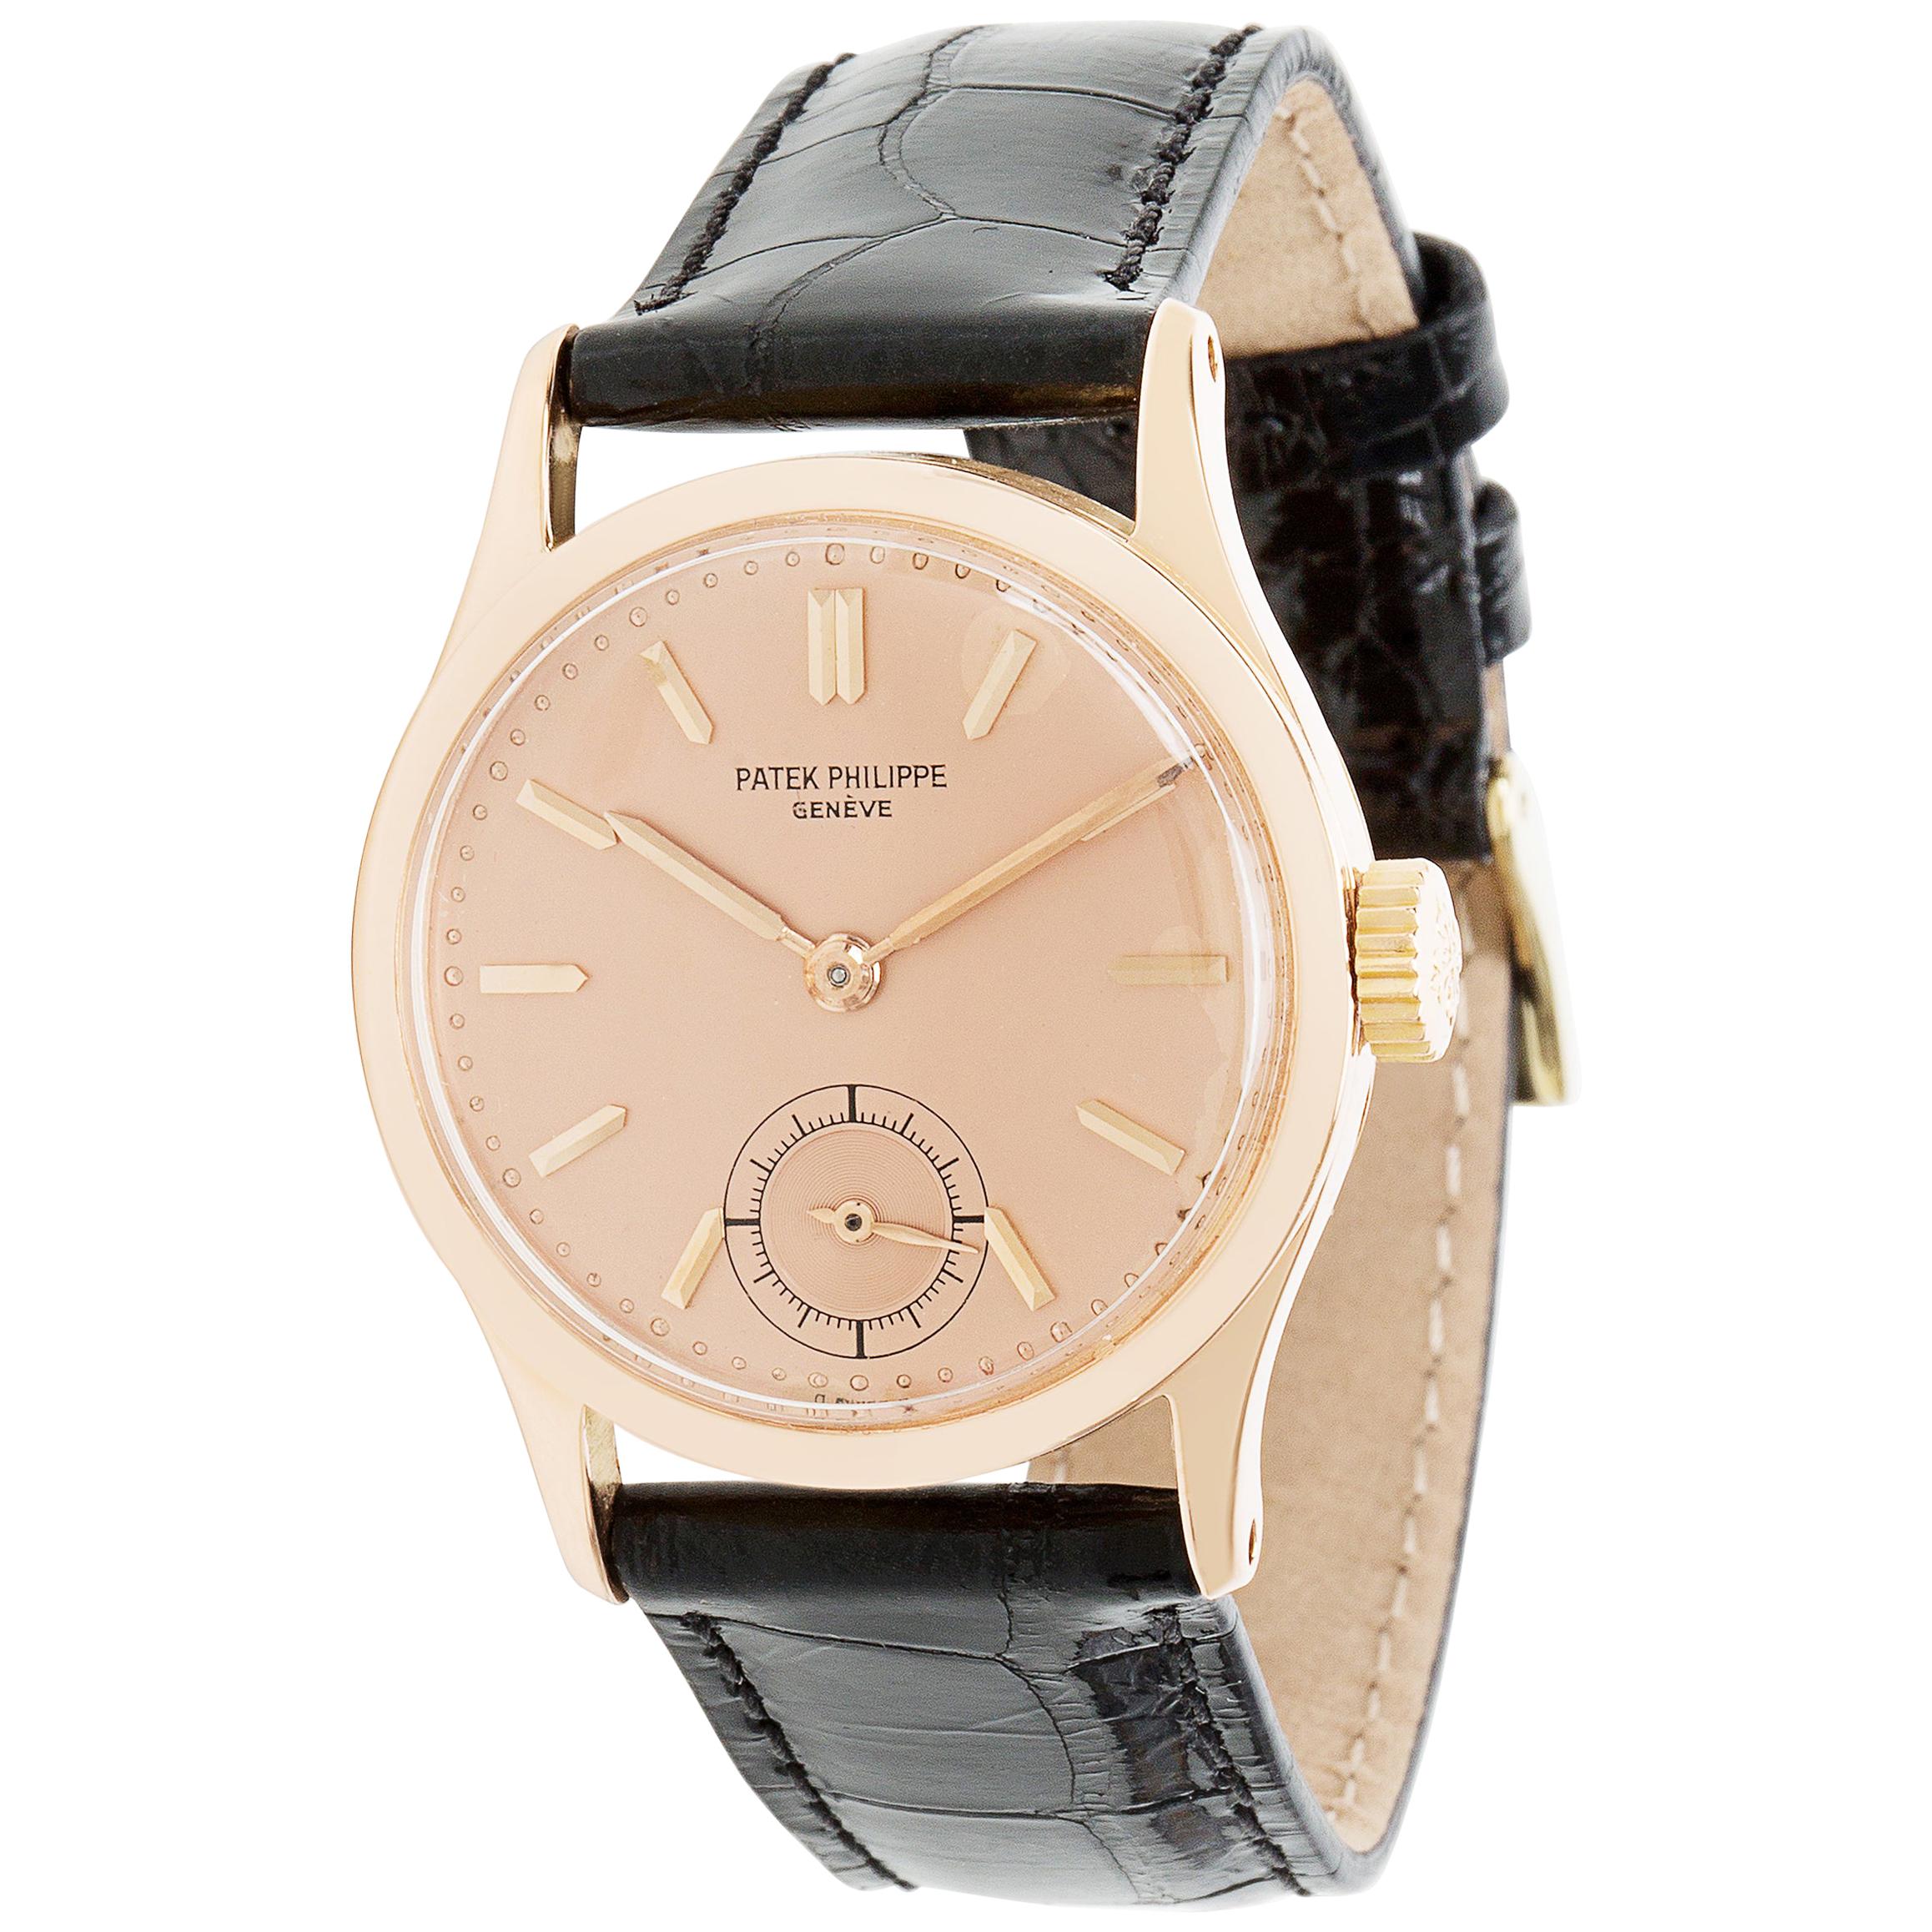 Vintage Patek Philippe Calatrava 96R Unisex Watch in Rose Gold